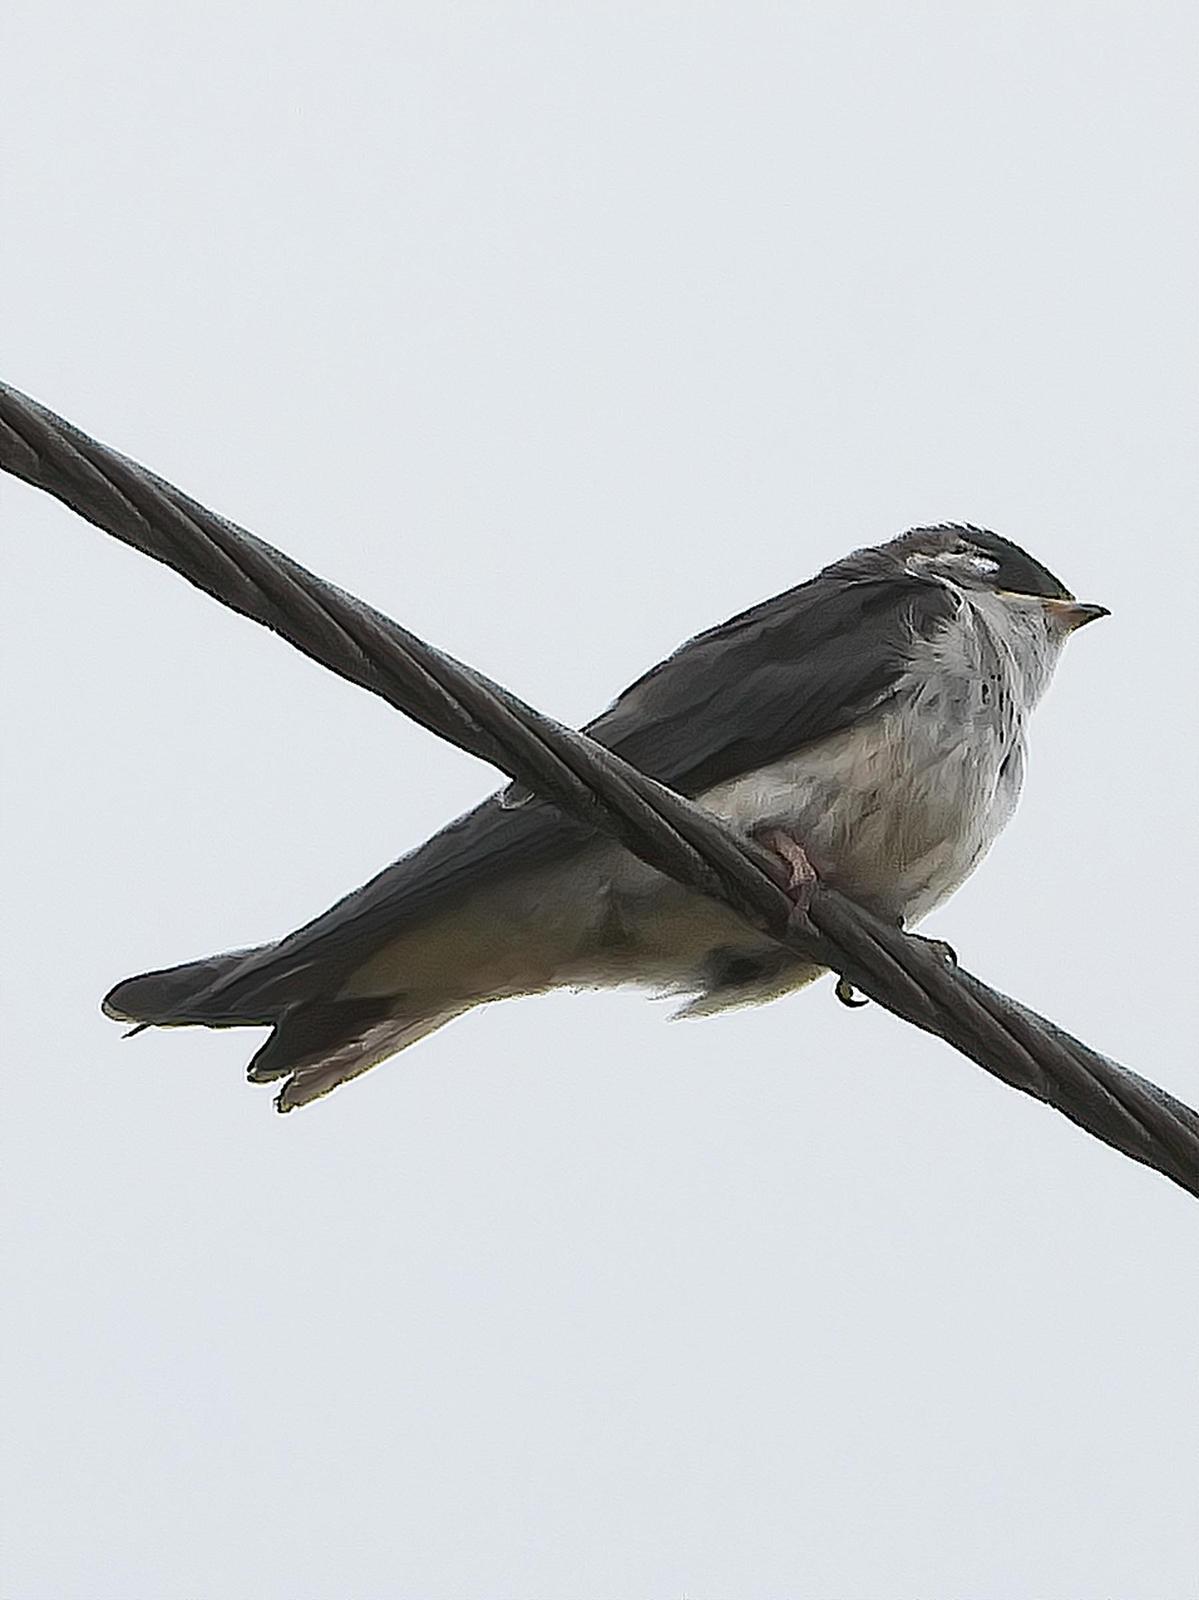 Violet-green Swallow Photo by Dan Tallman